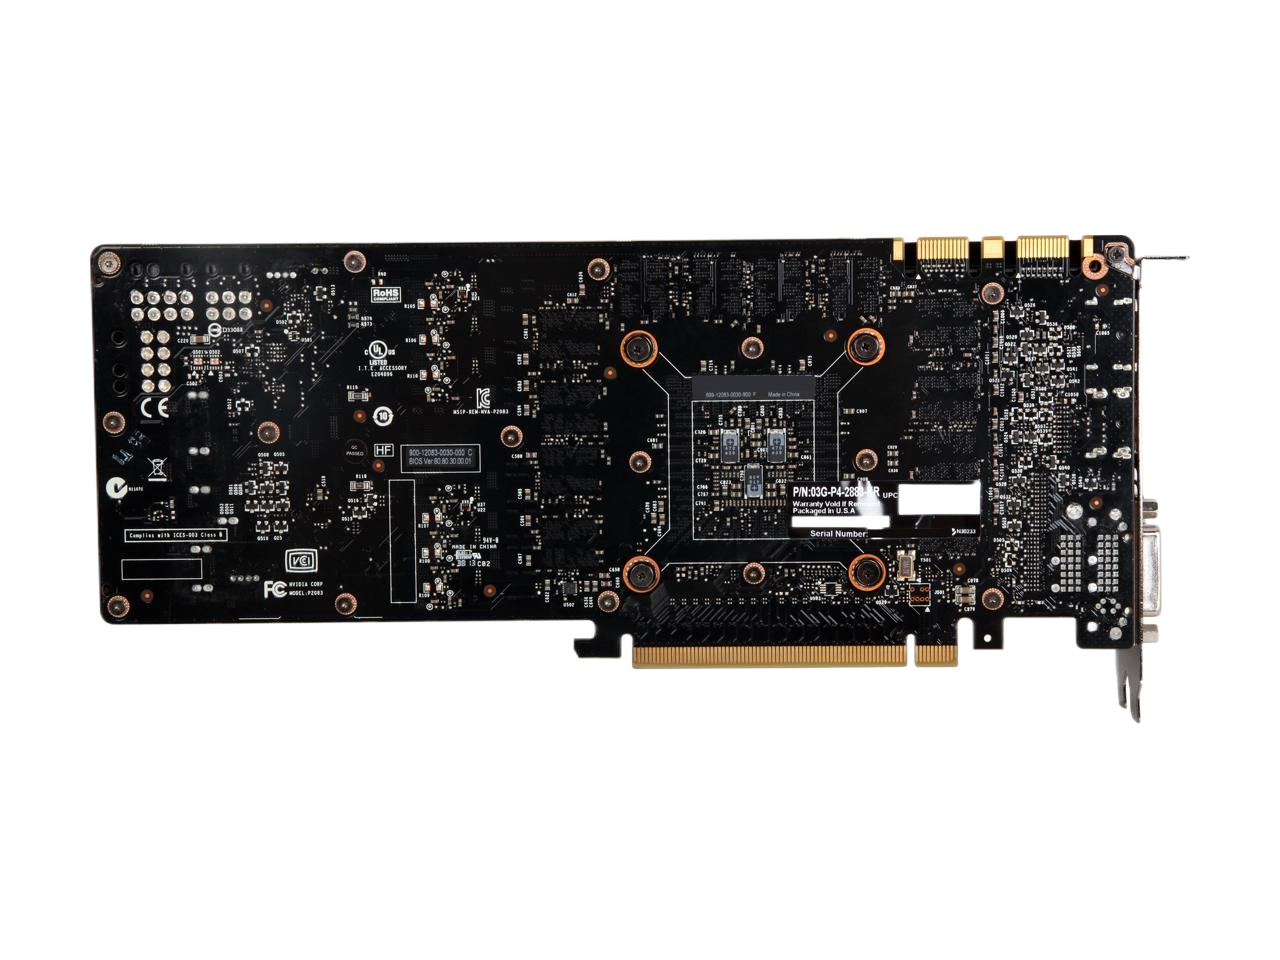 EVGA GeForce GTX 780 Ti Superclocked 3GB 384-Bit GDDR5 PCI Express 3.0 SLI Support G-SYNC Support Video Card 03G-P4-2883-KR